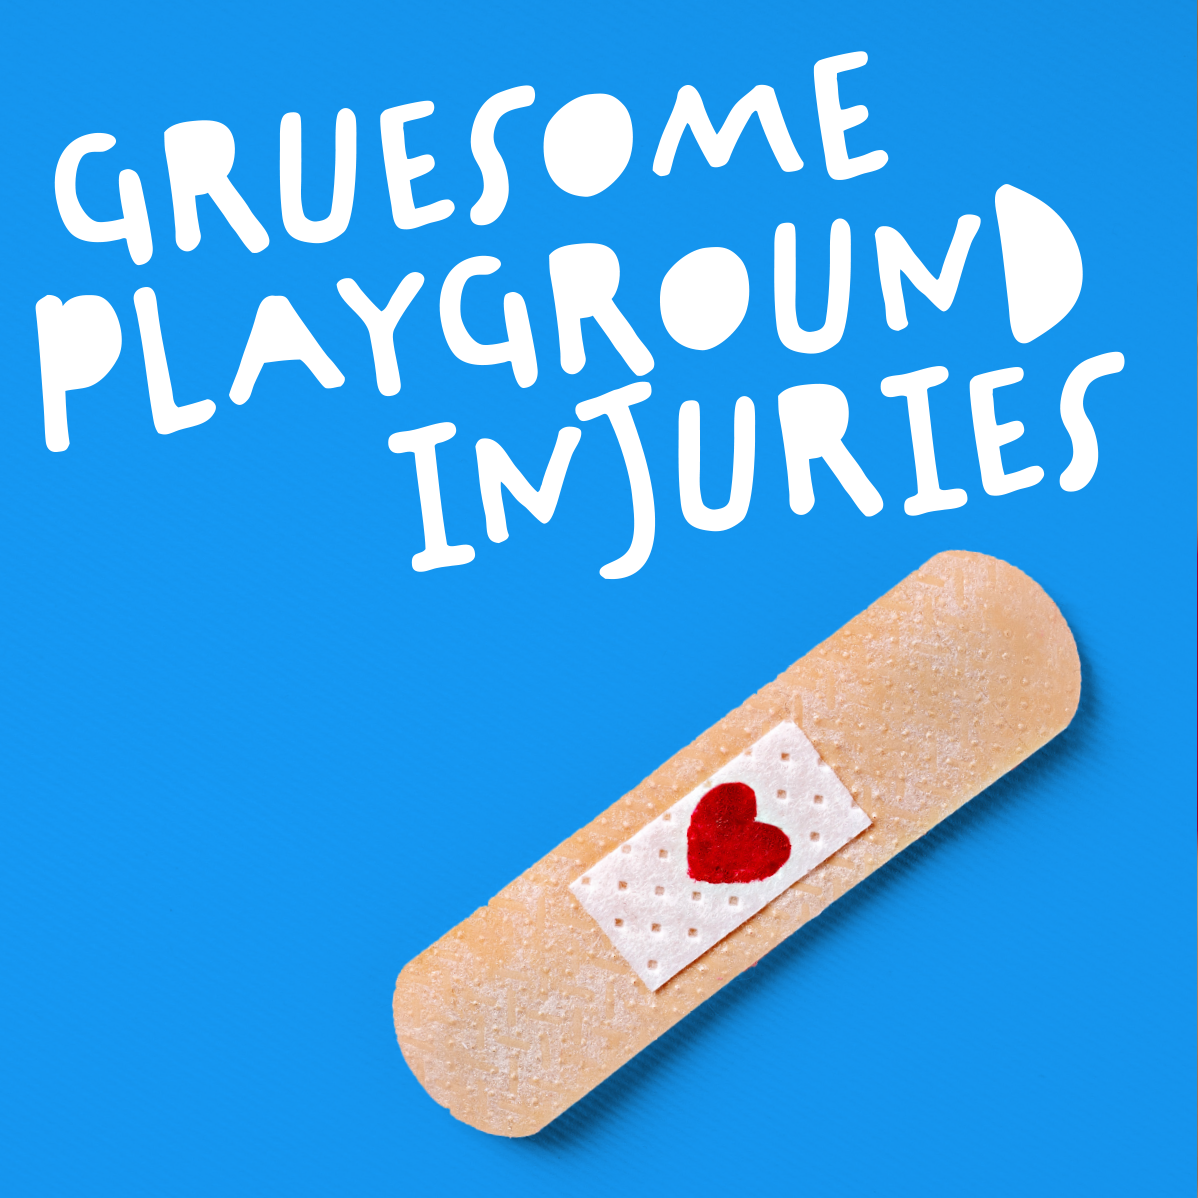 GV play visual - Gruesome Playground Injuries